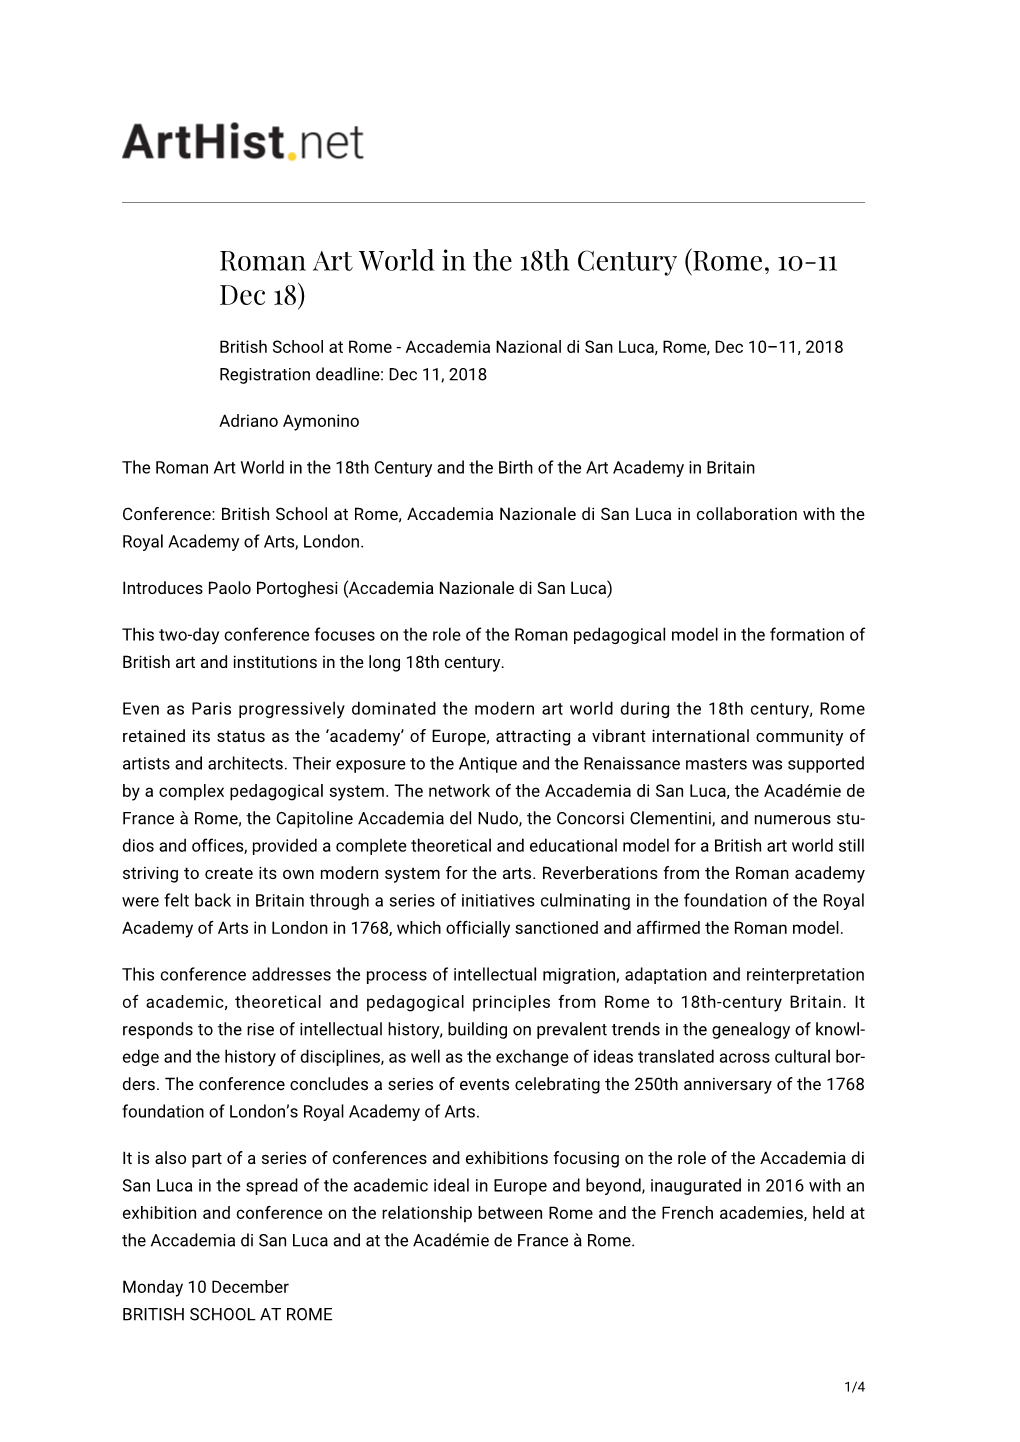 Roman Art World in the 18Th Century (Rome, 10-11 Dec 18)